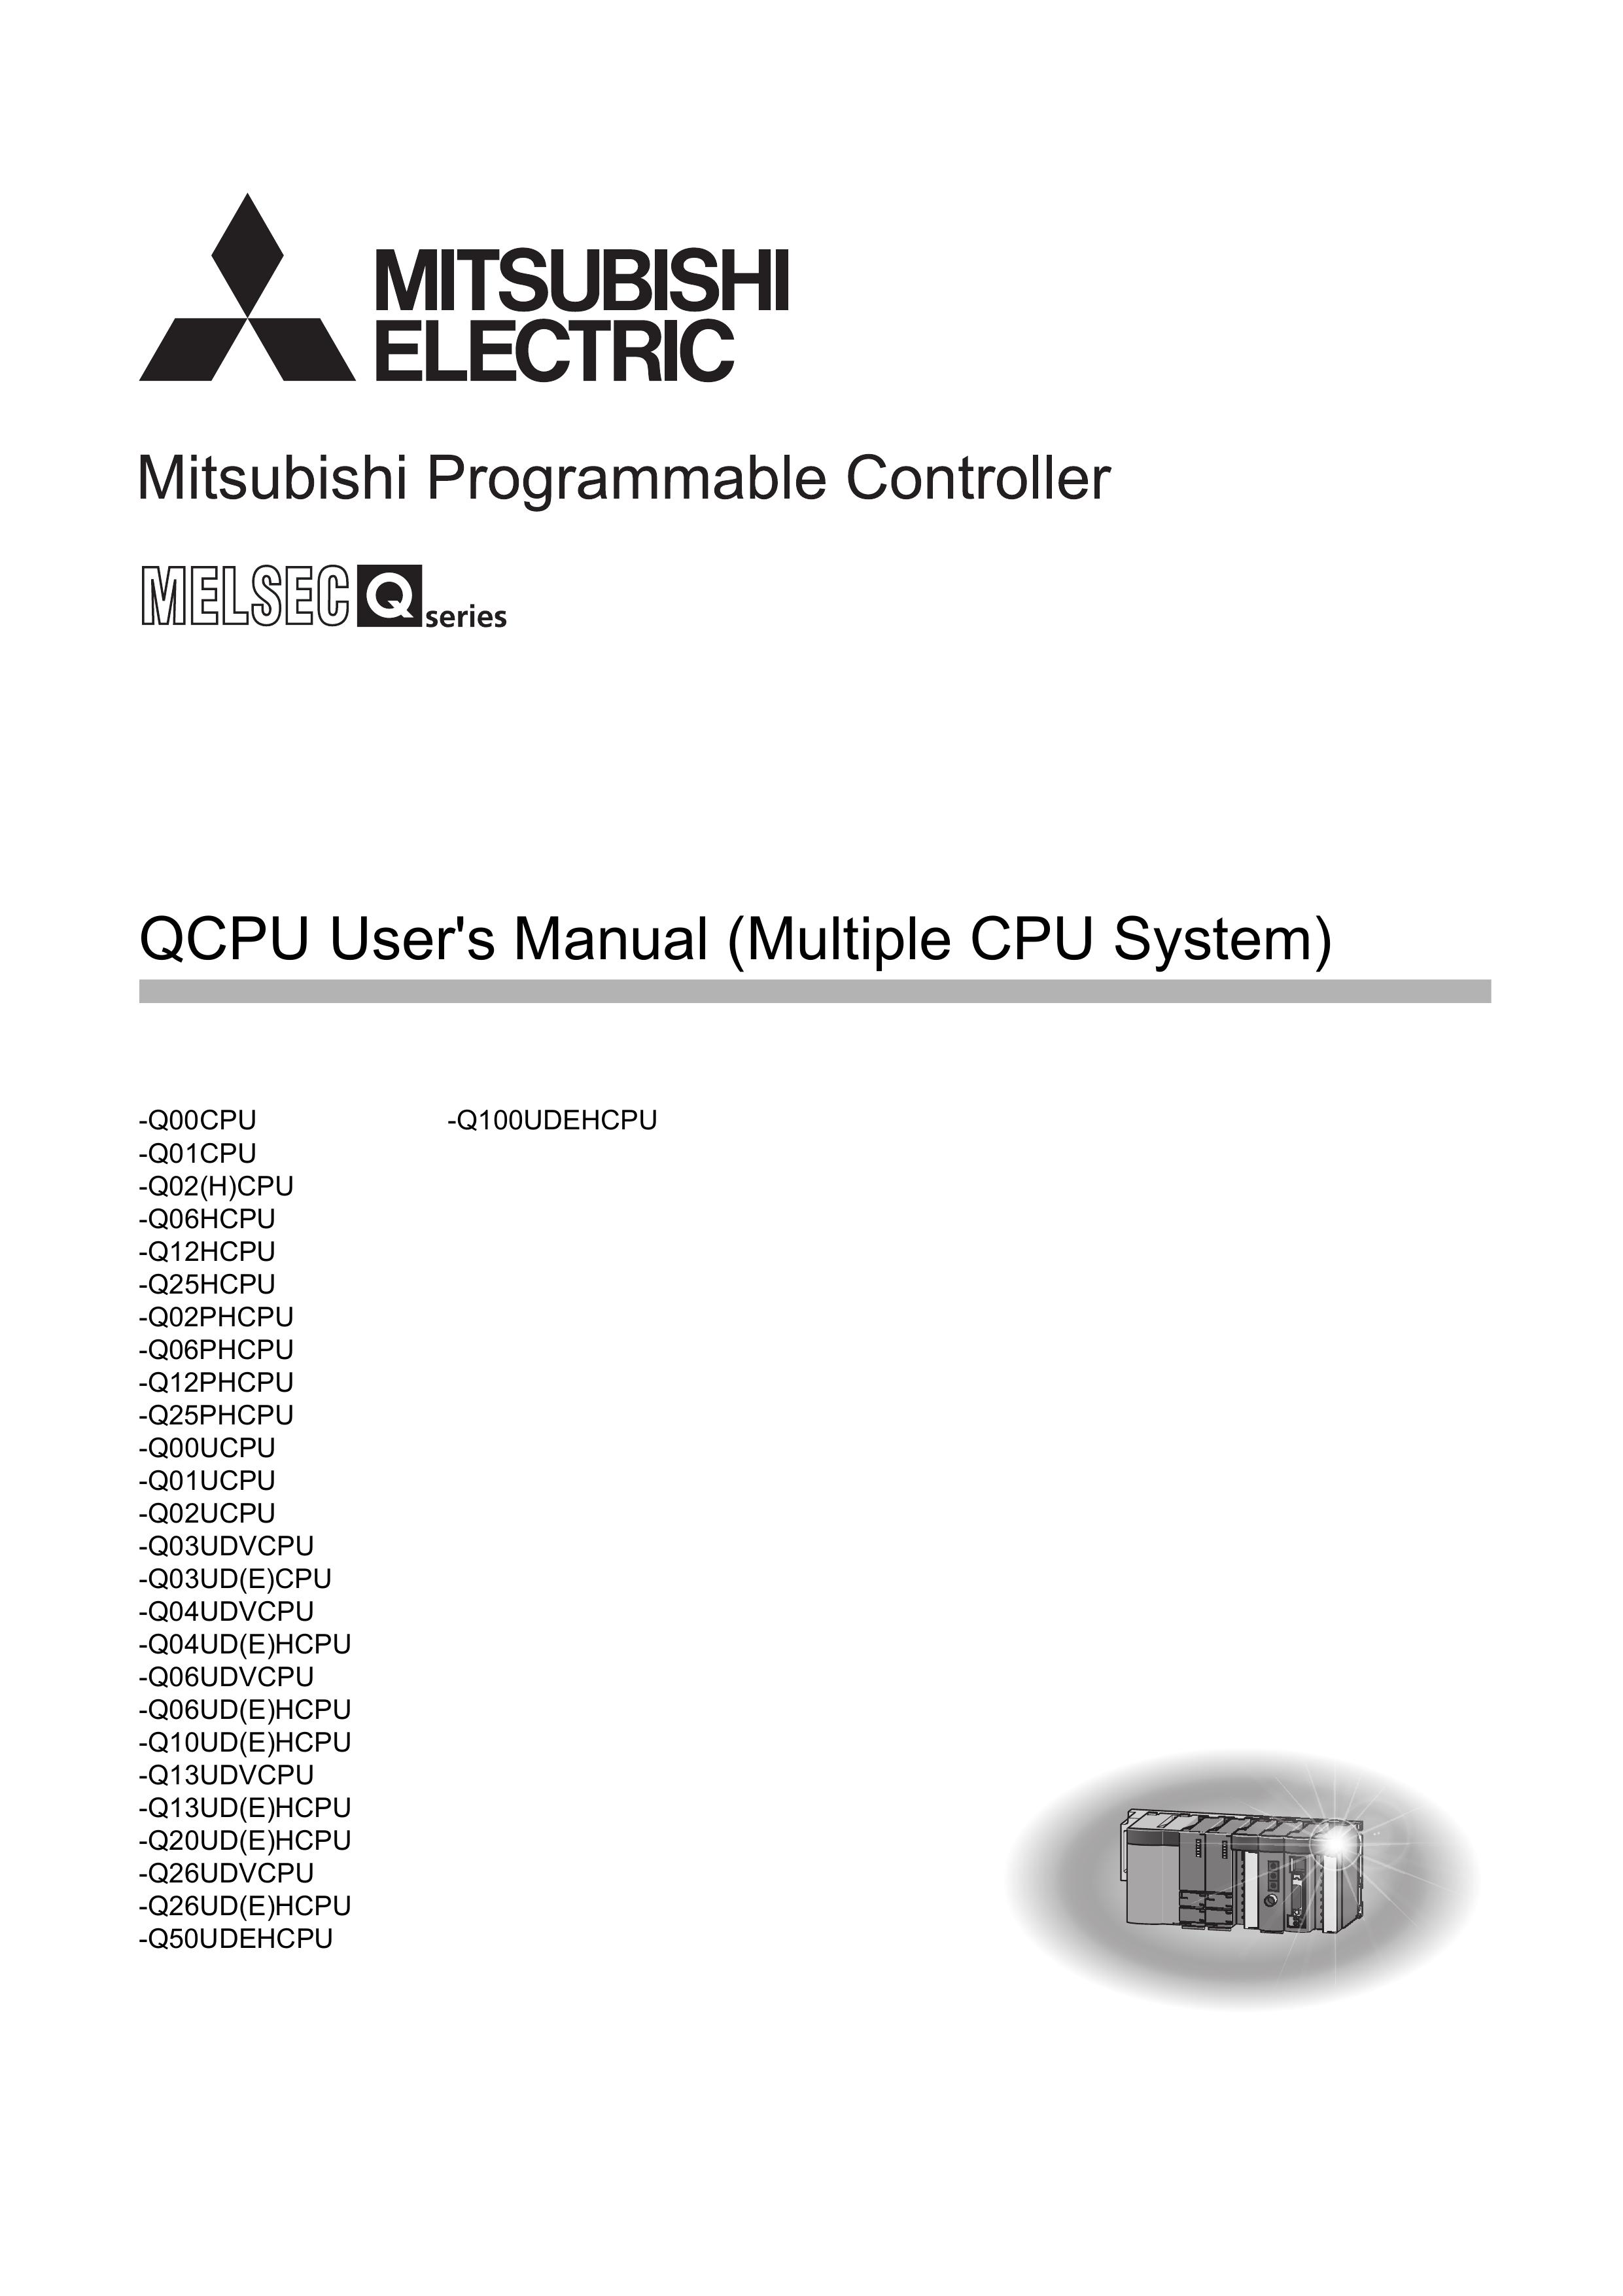 Mitsubishi Electronics Q04UD(E)HCPU Sleep Apnea Machine User Manual